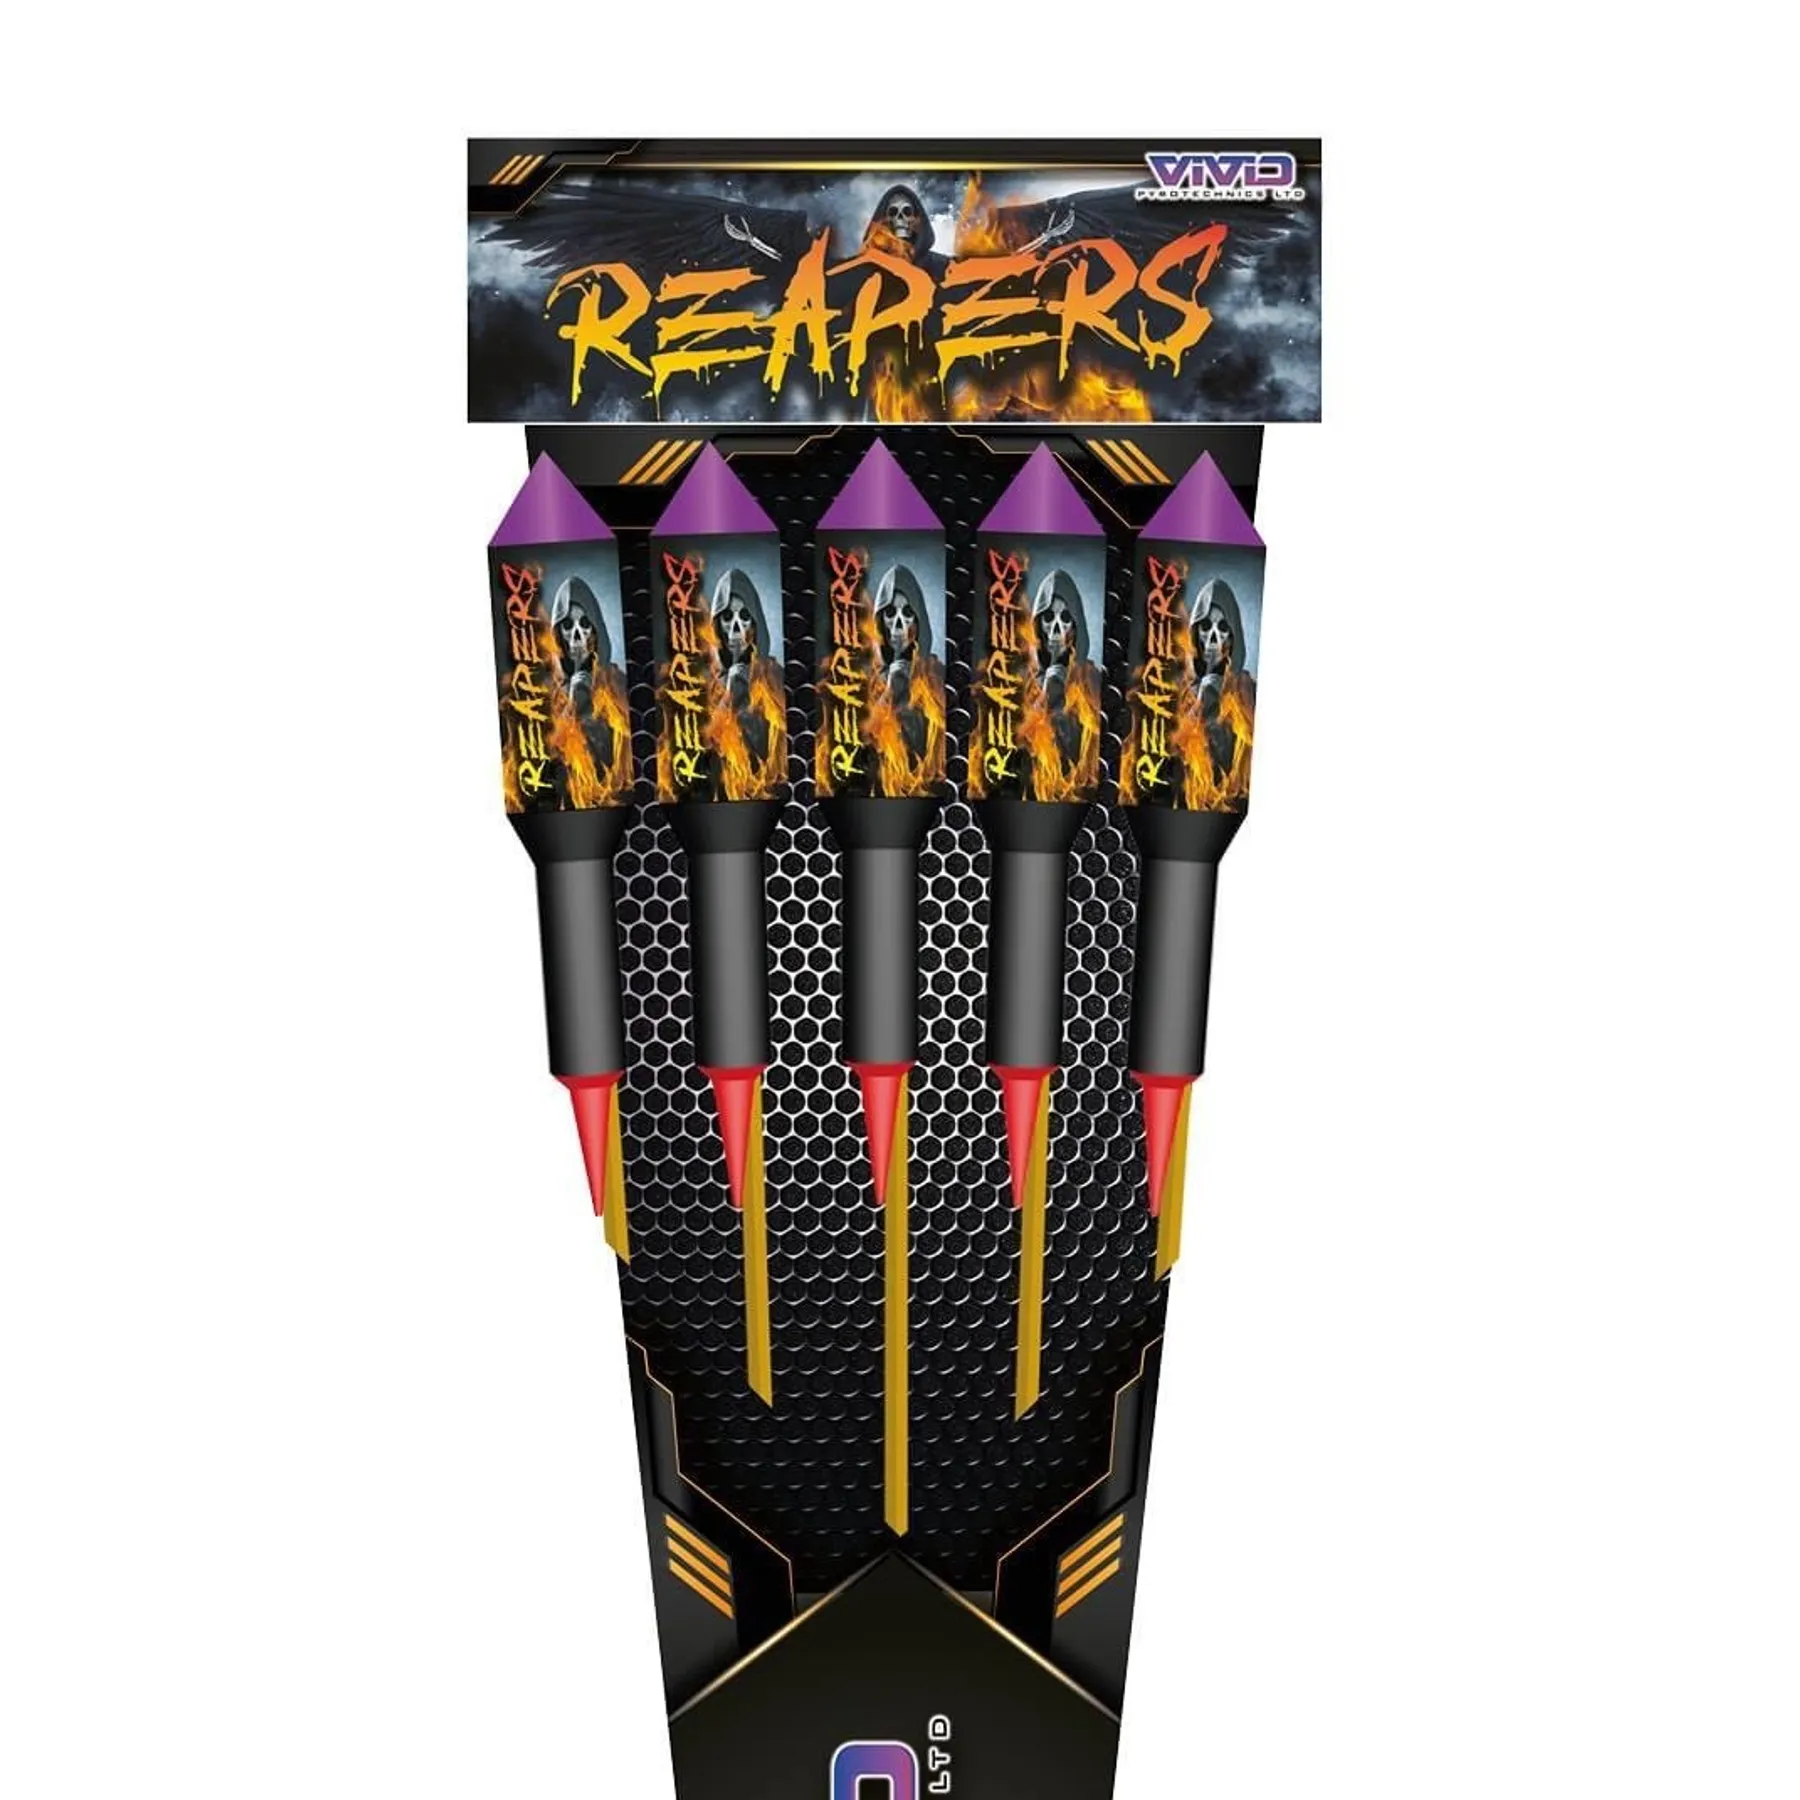 reaper rockets - vivid fireworks